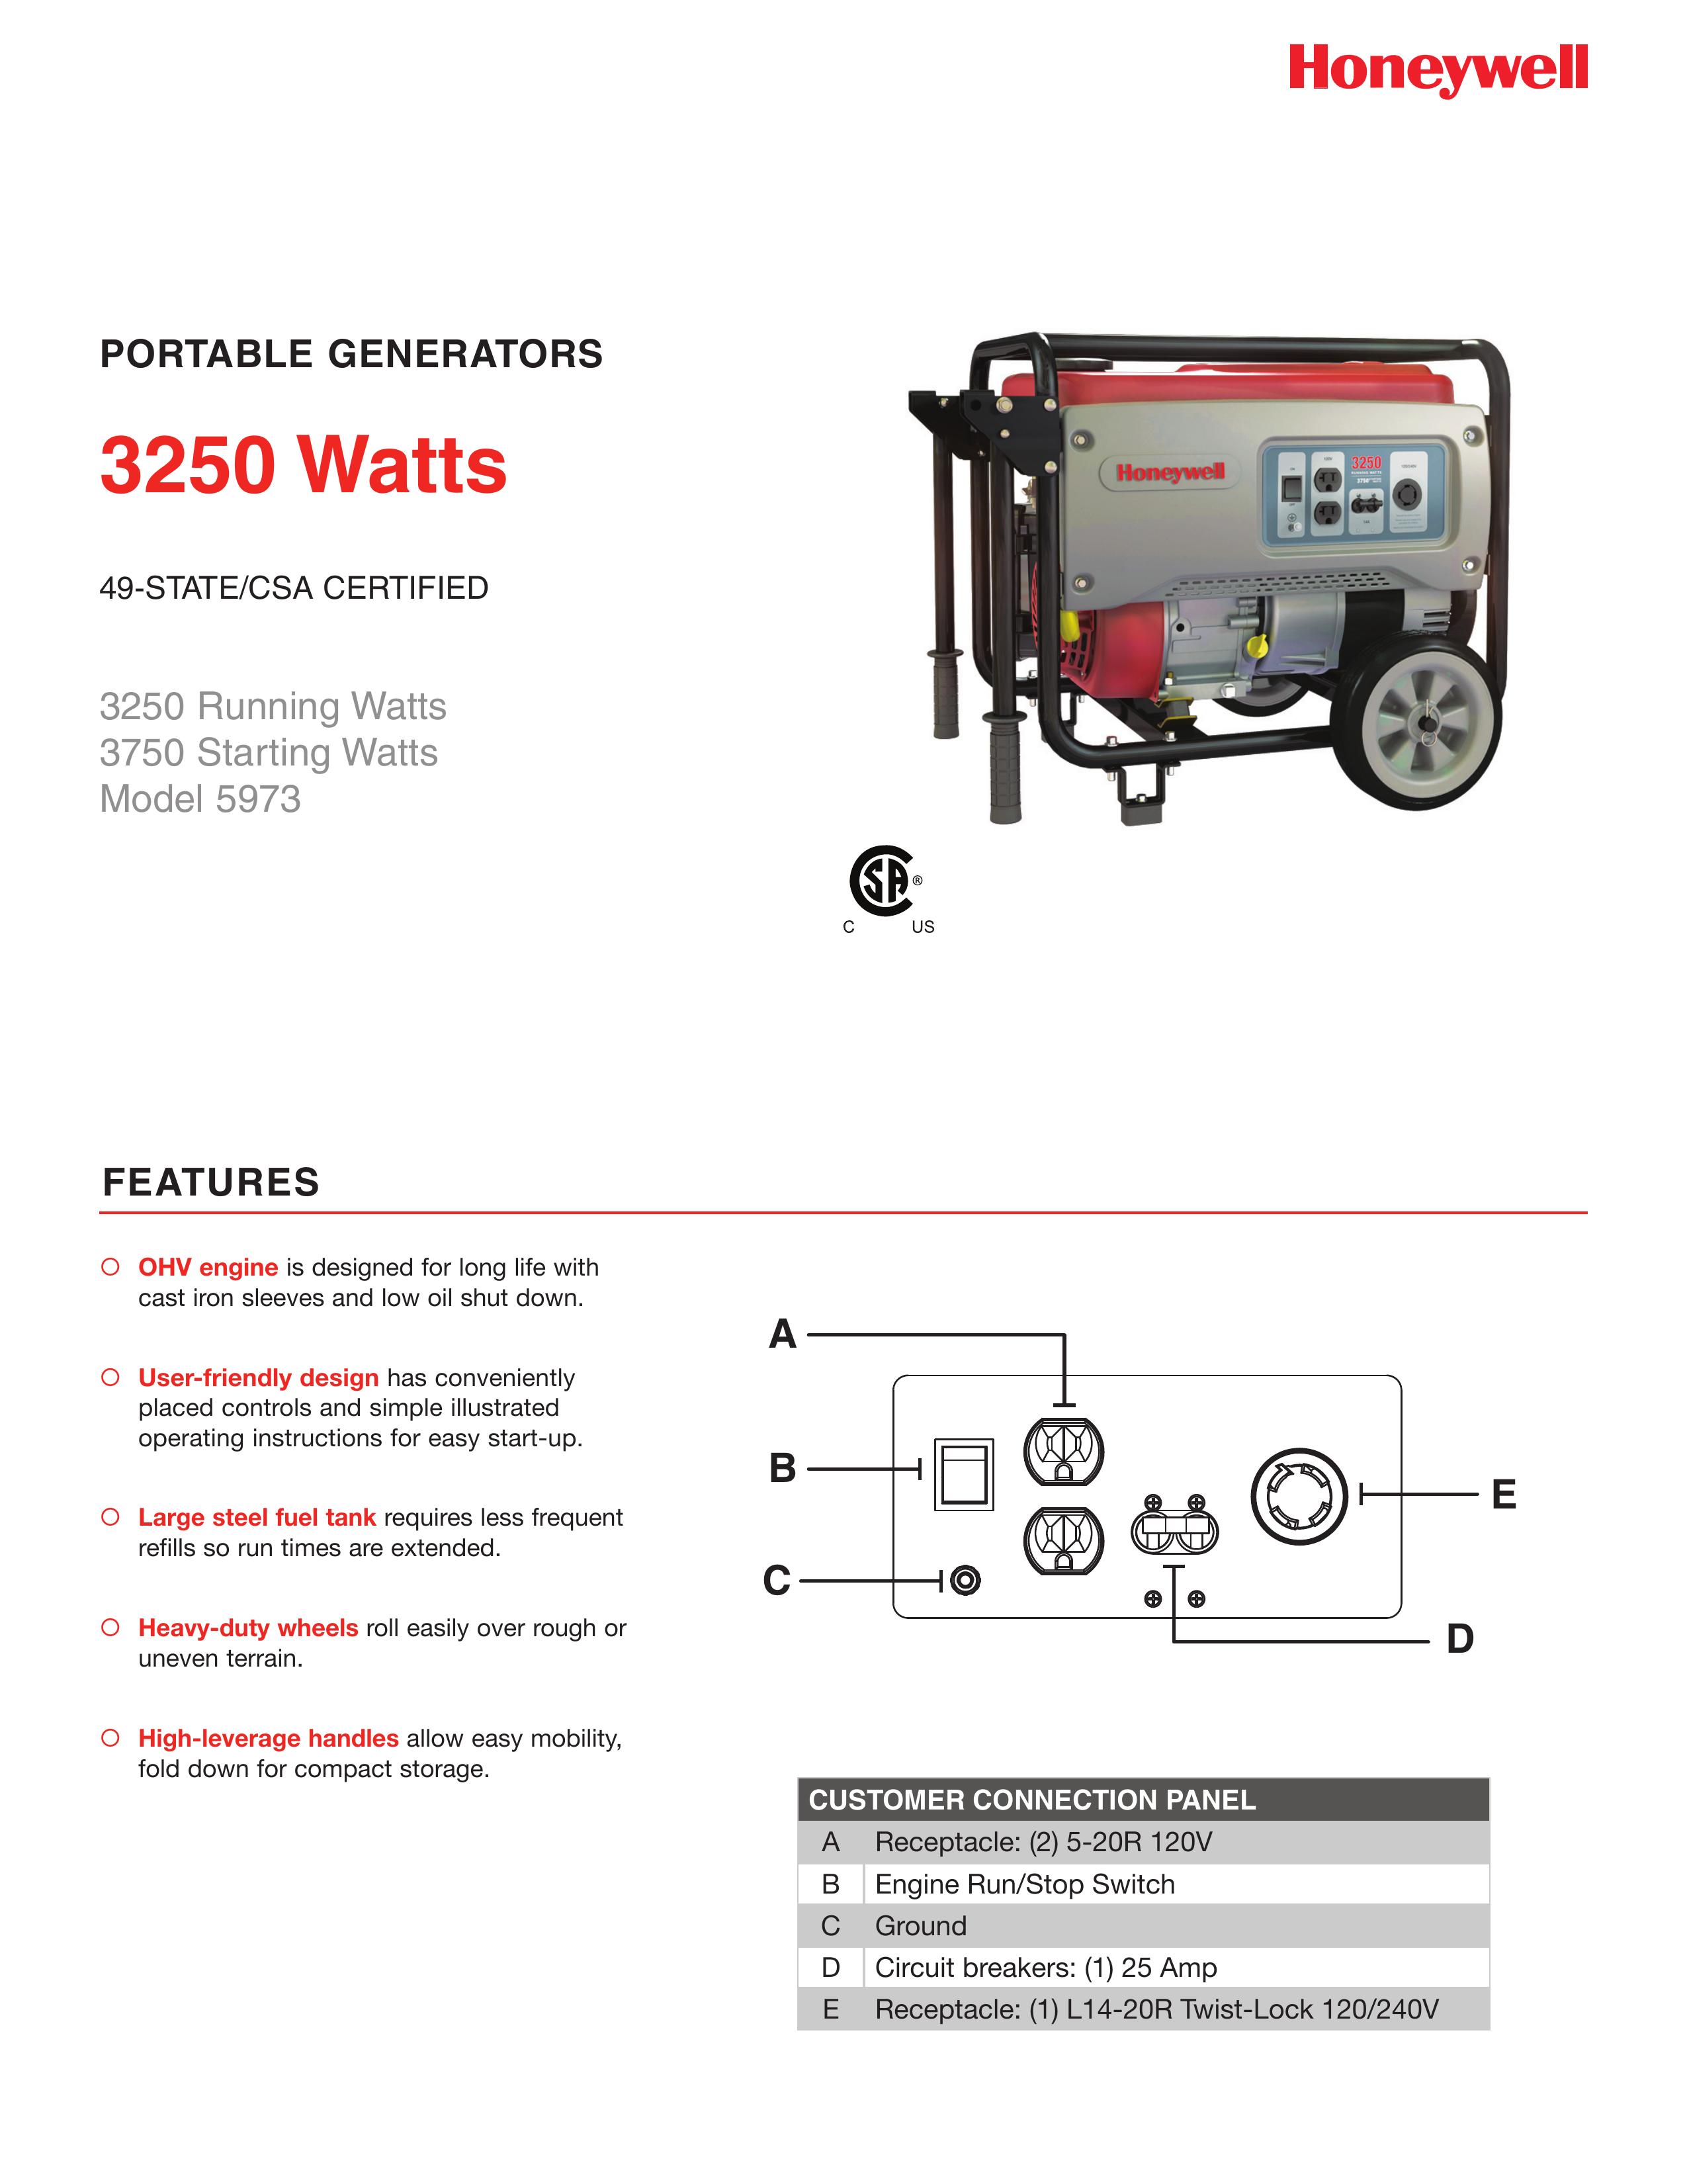 Honeywell 5973R Portable Generator User Manual